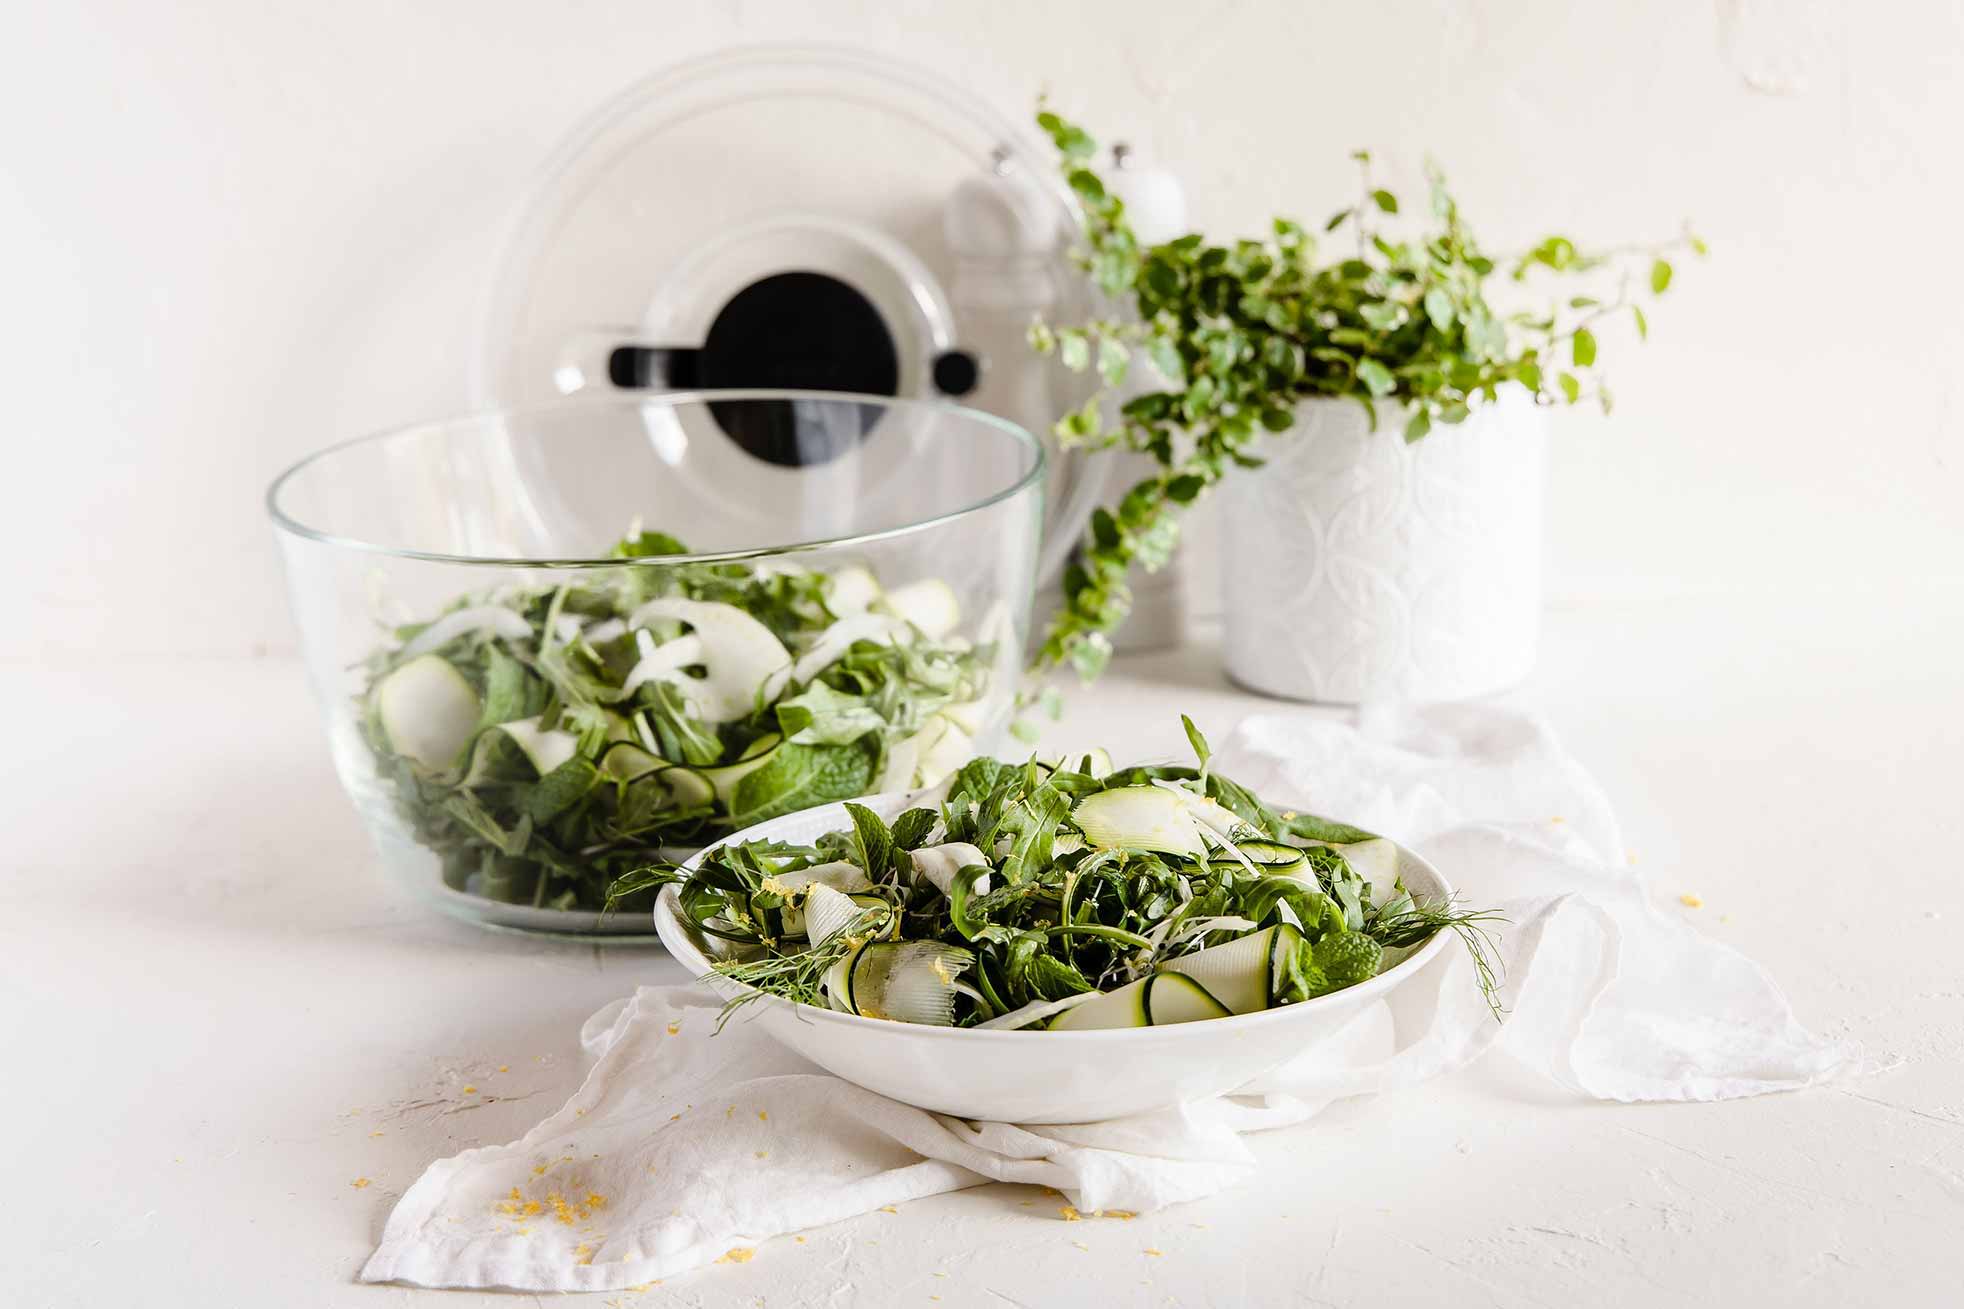 Spring Salad Recipe by Naomin Sherman | Minimax